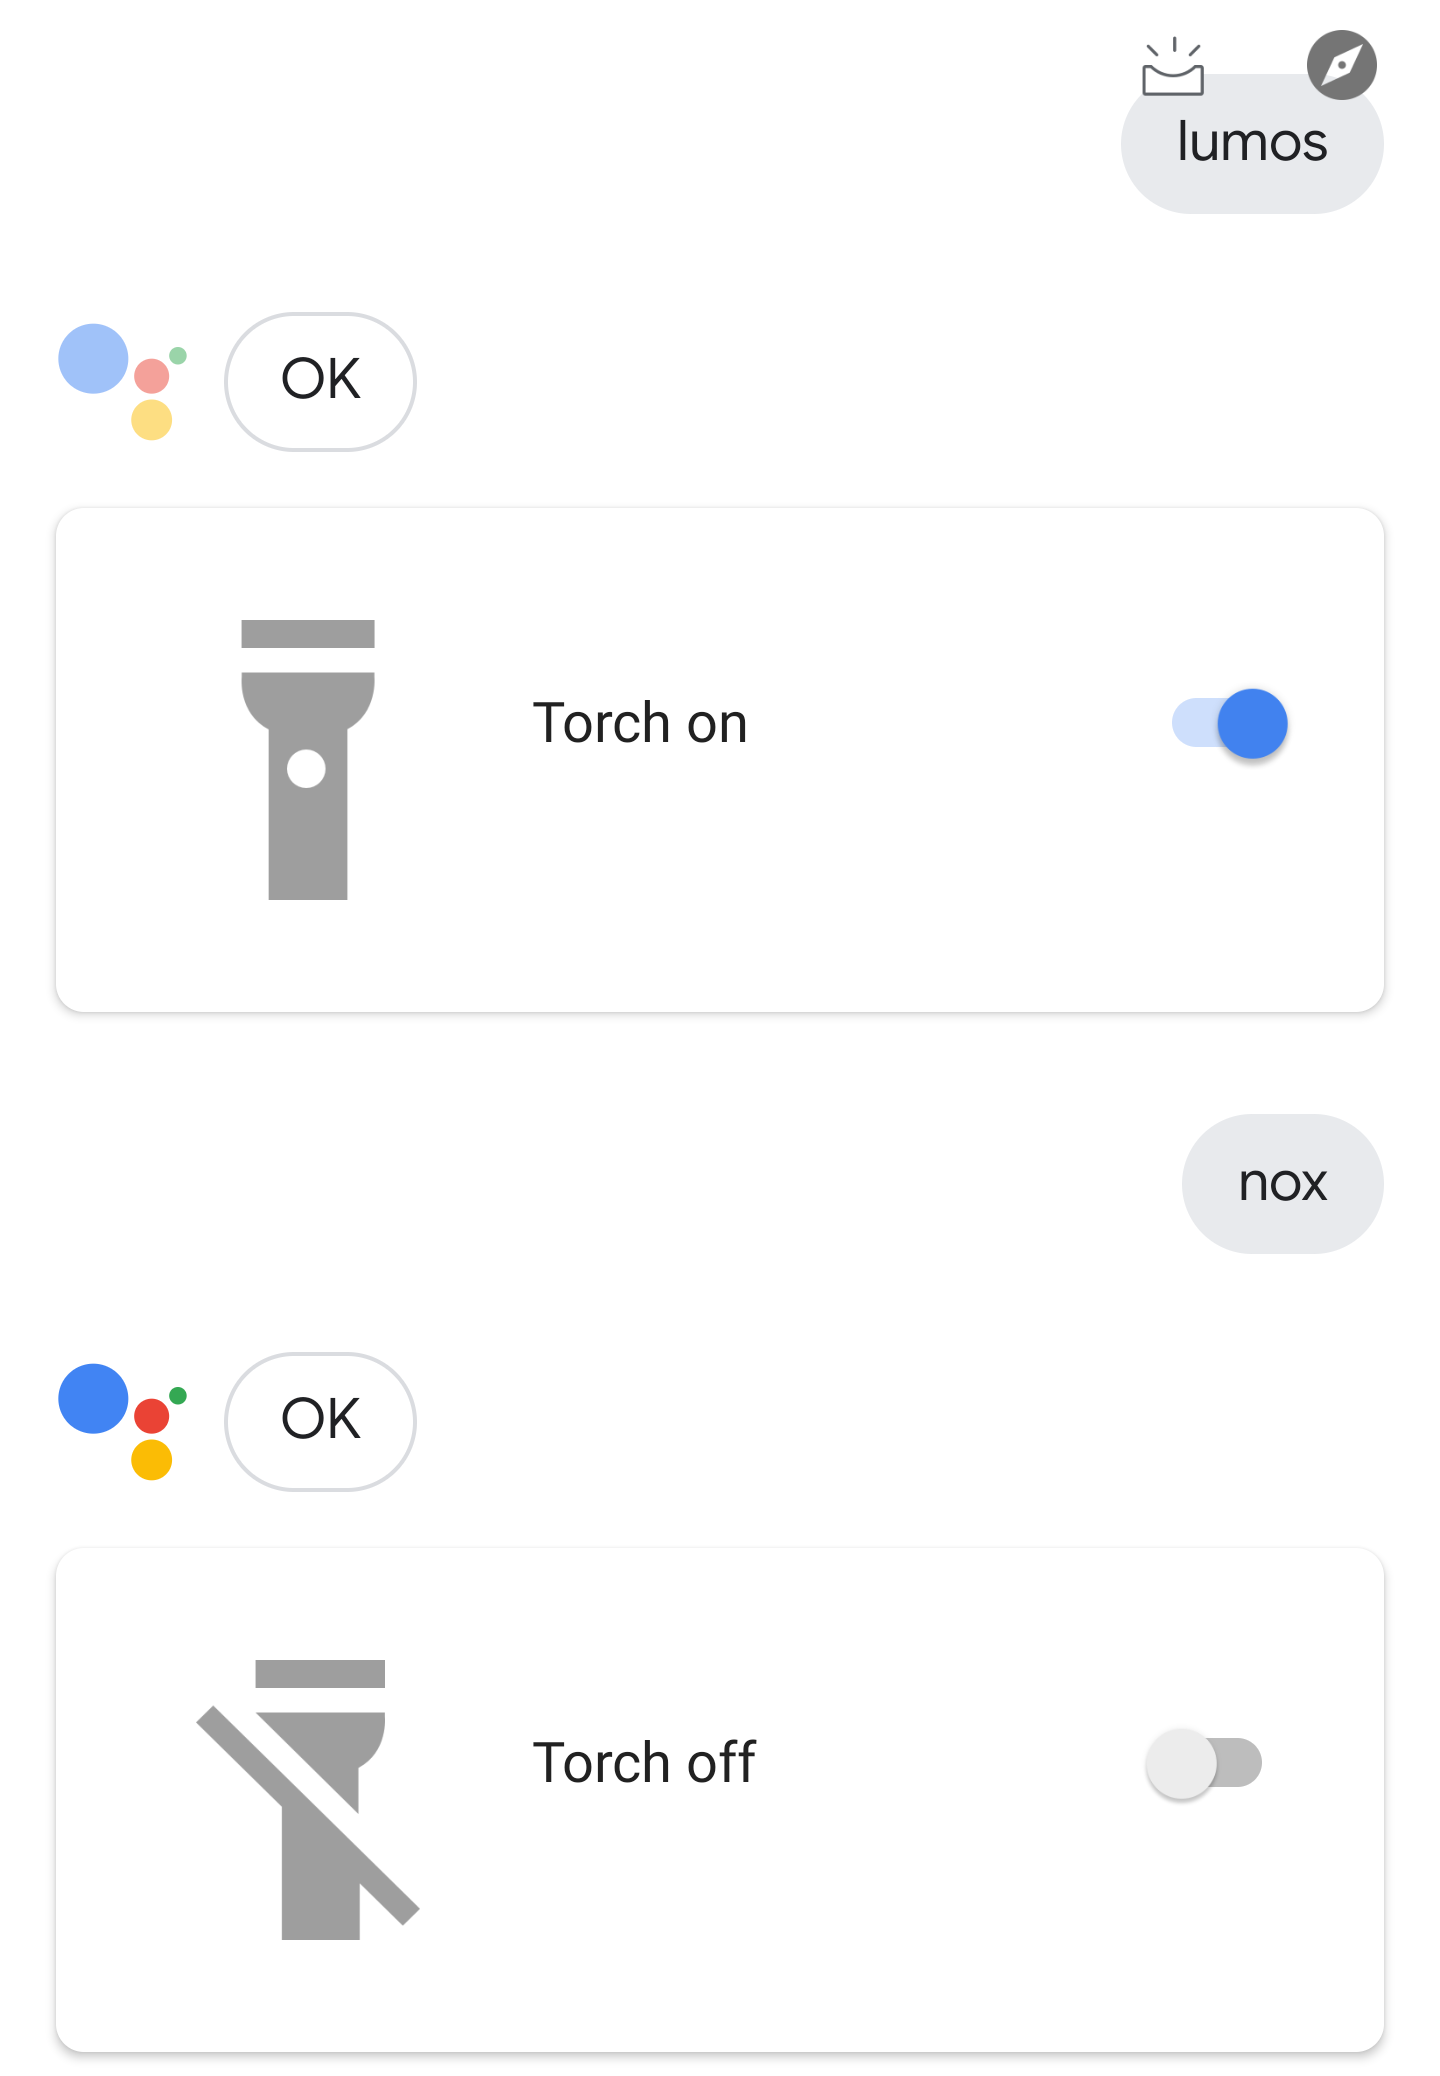 Ok Google Lumos, Ok Google Lumens Maxima